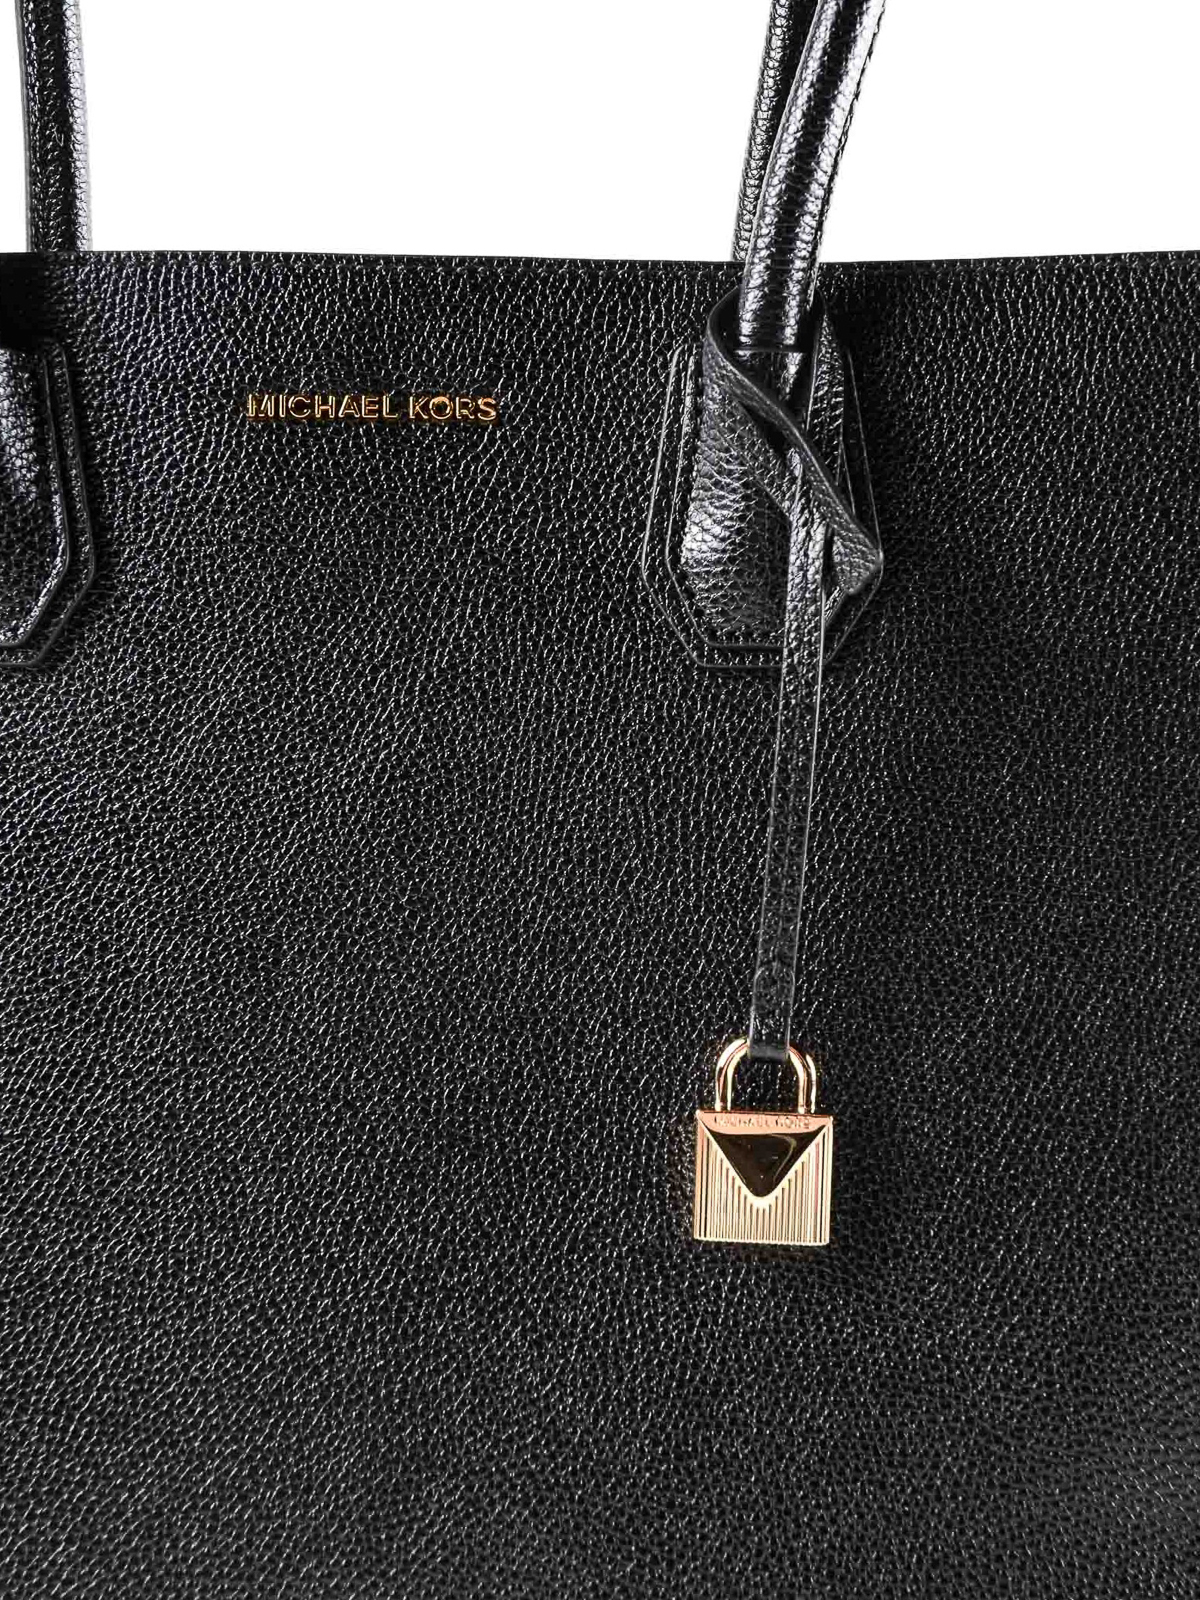 Michael Kors - Mercer XL black leather 